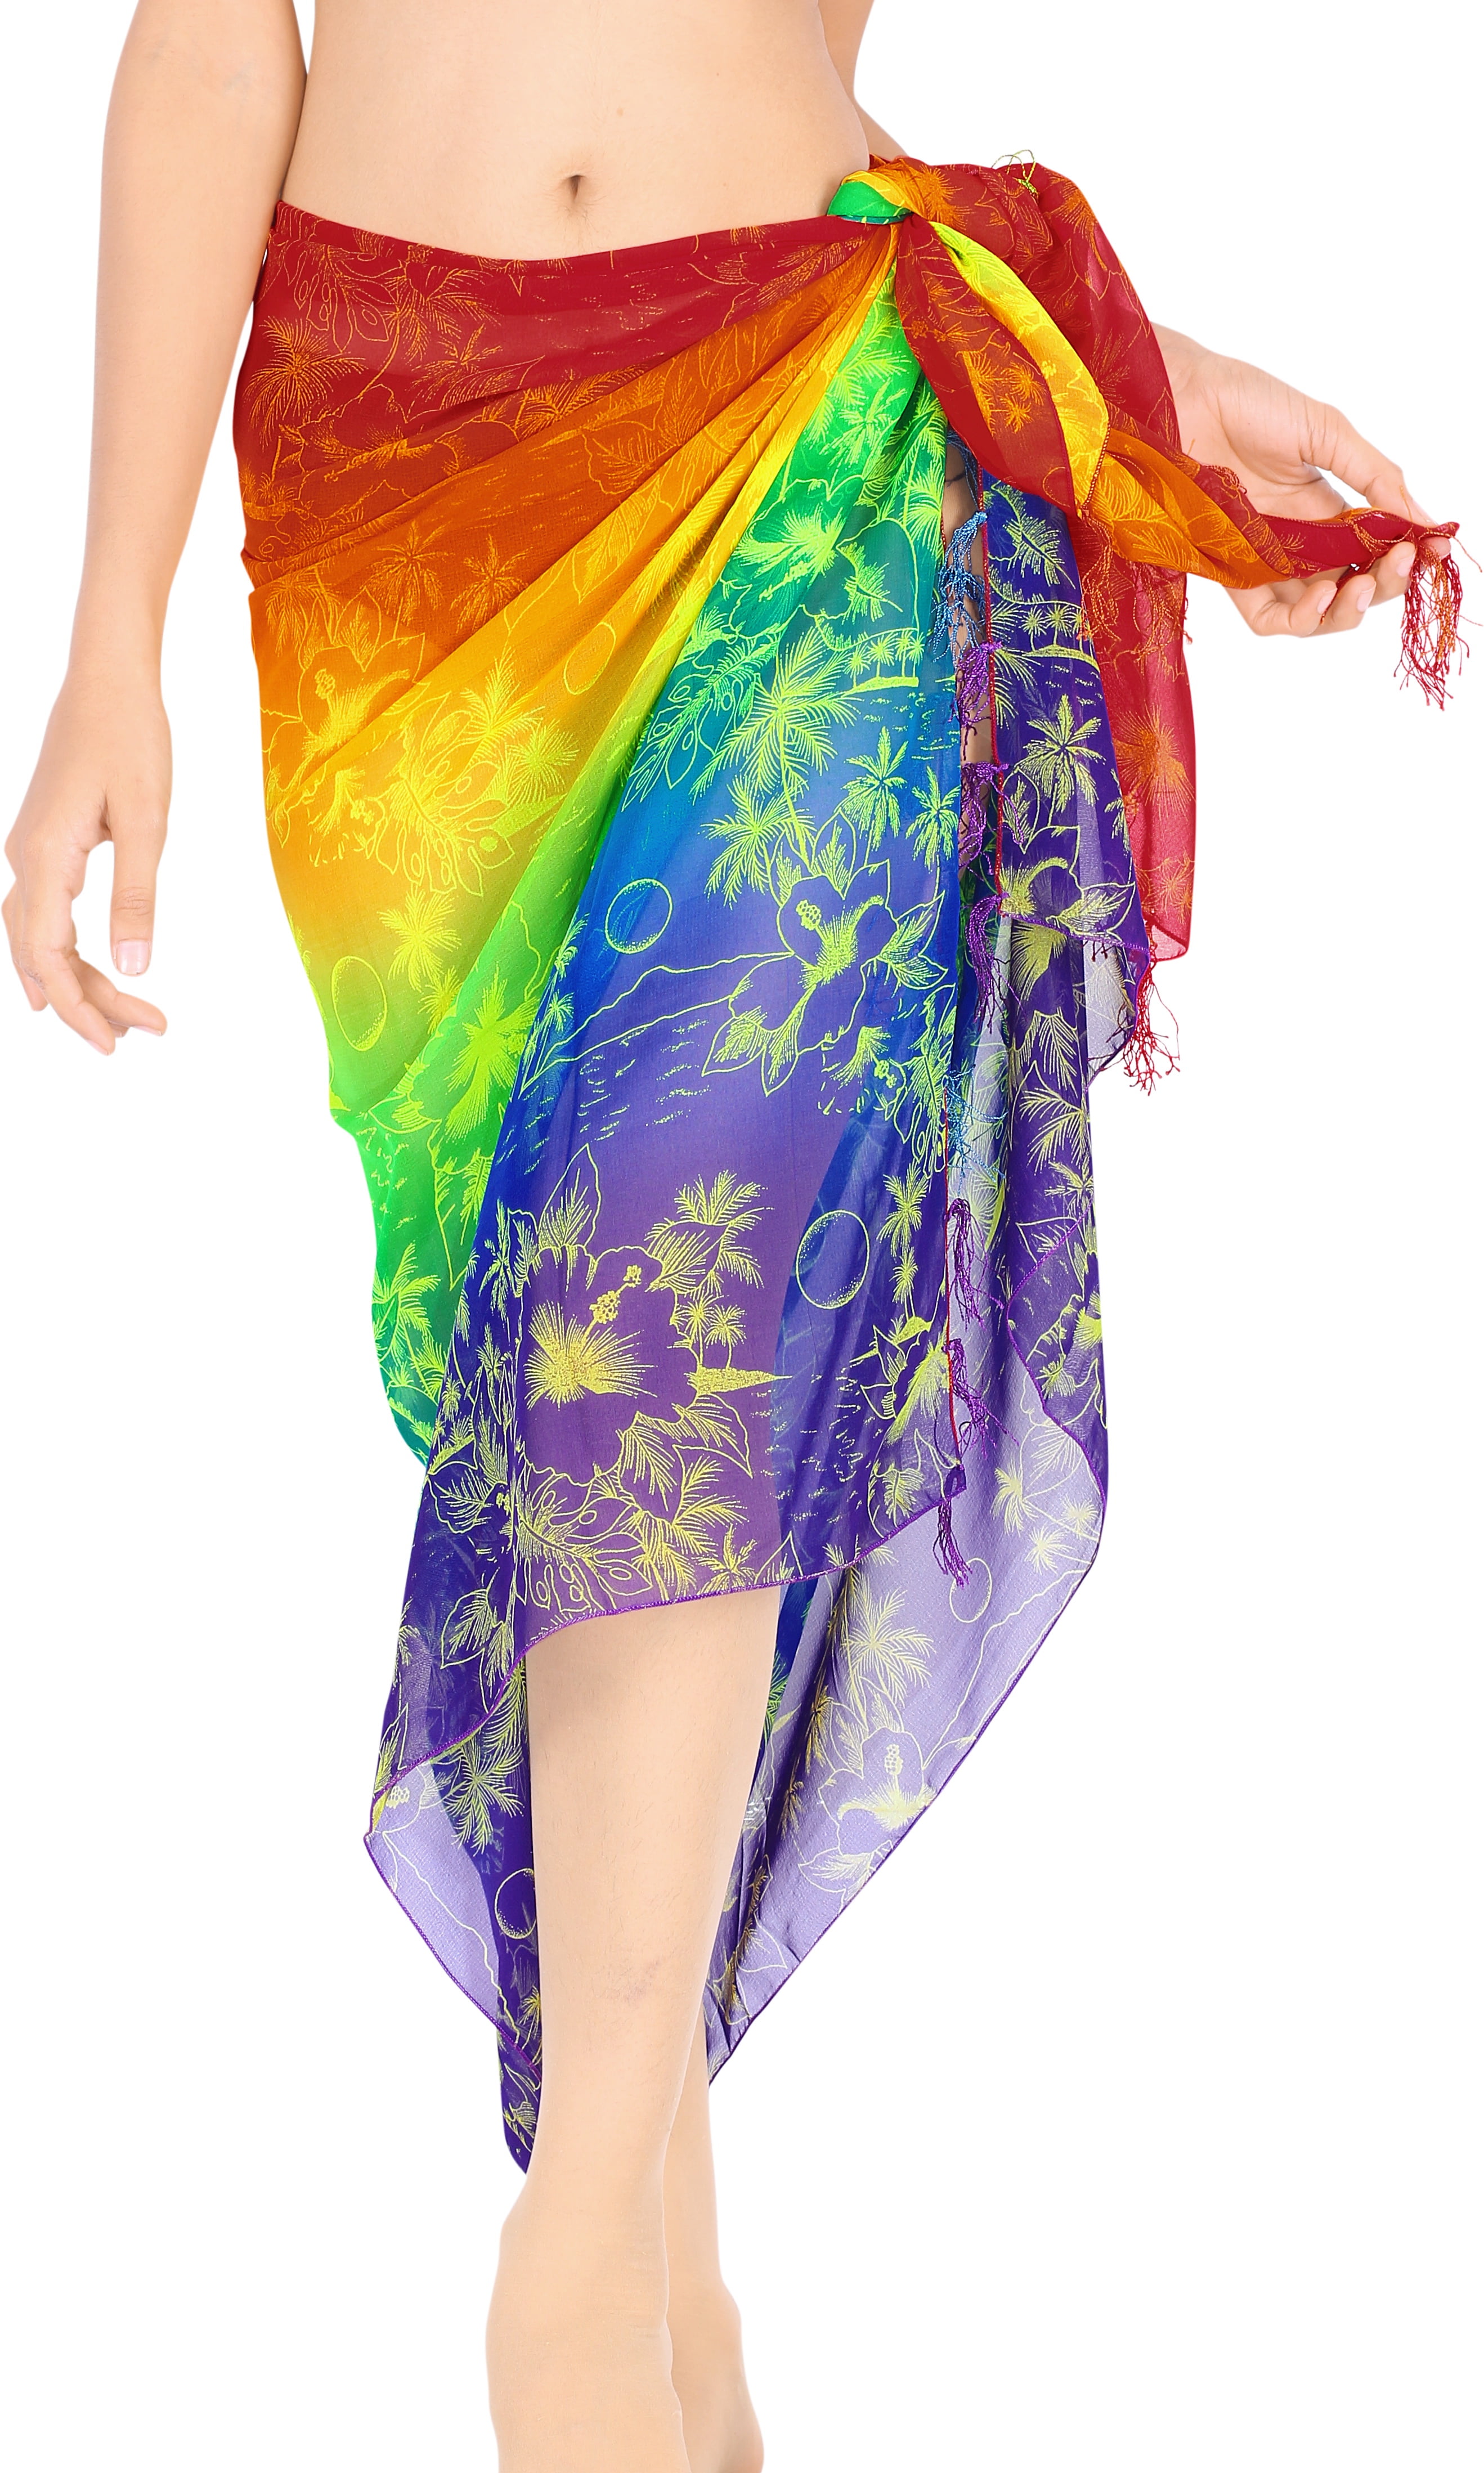 LA LEELA Rayon Aloha Bali Scarf Deal Dress Sarong Tie Dye